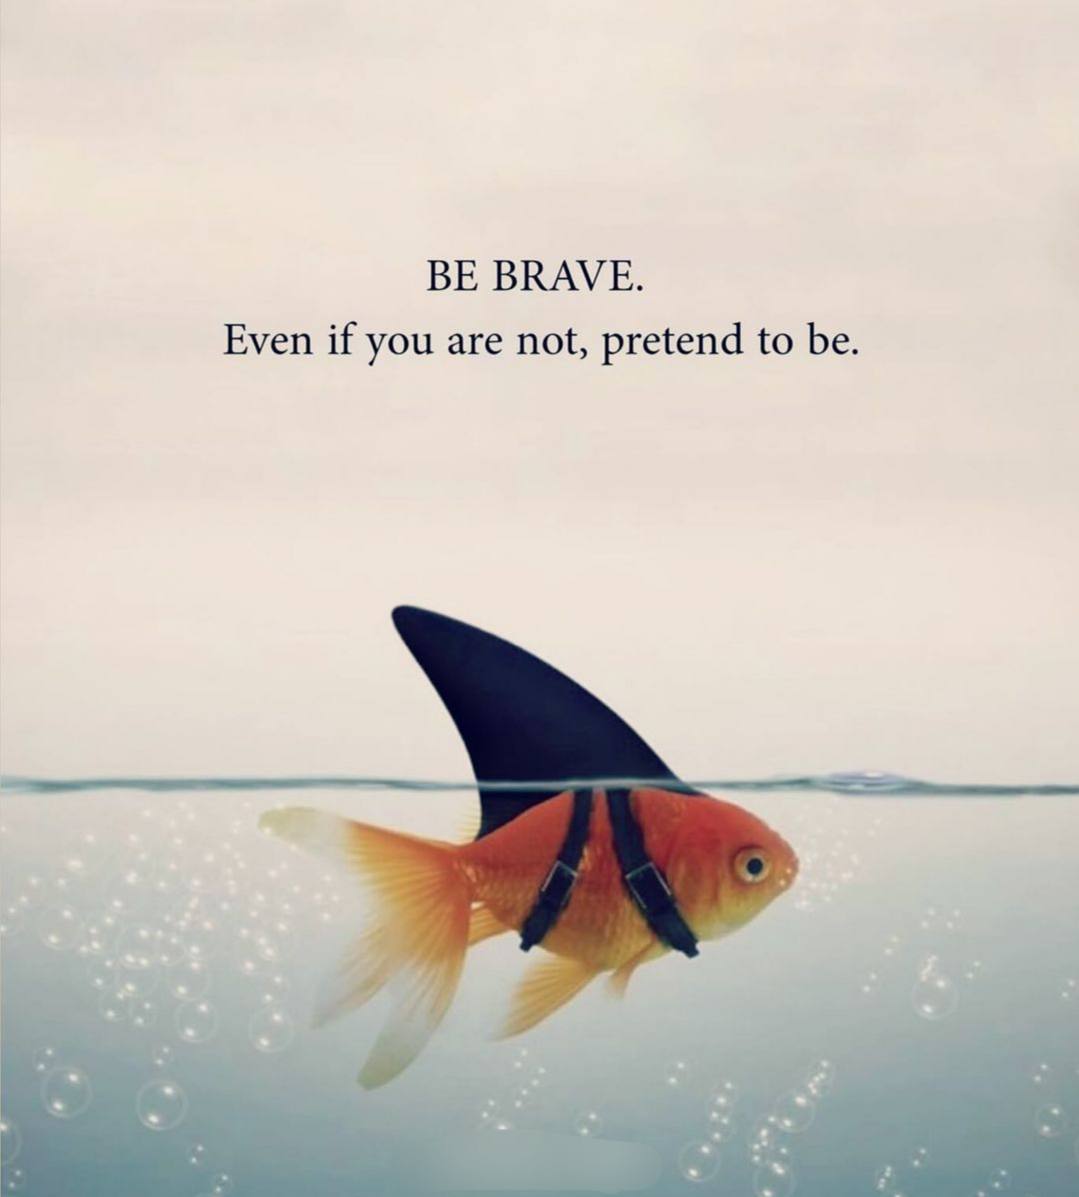 BE BRAVE.